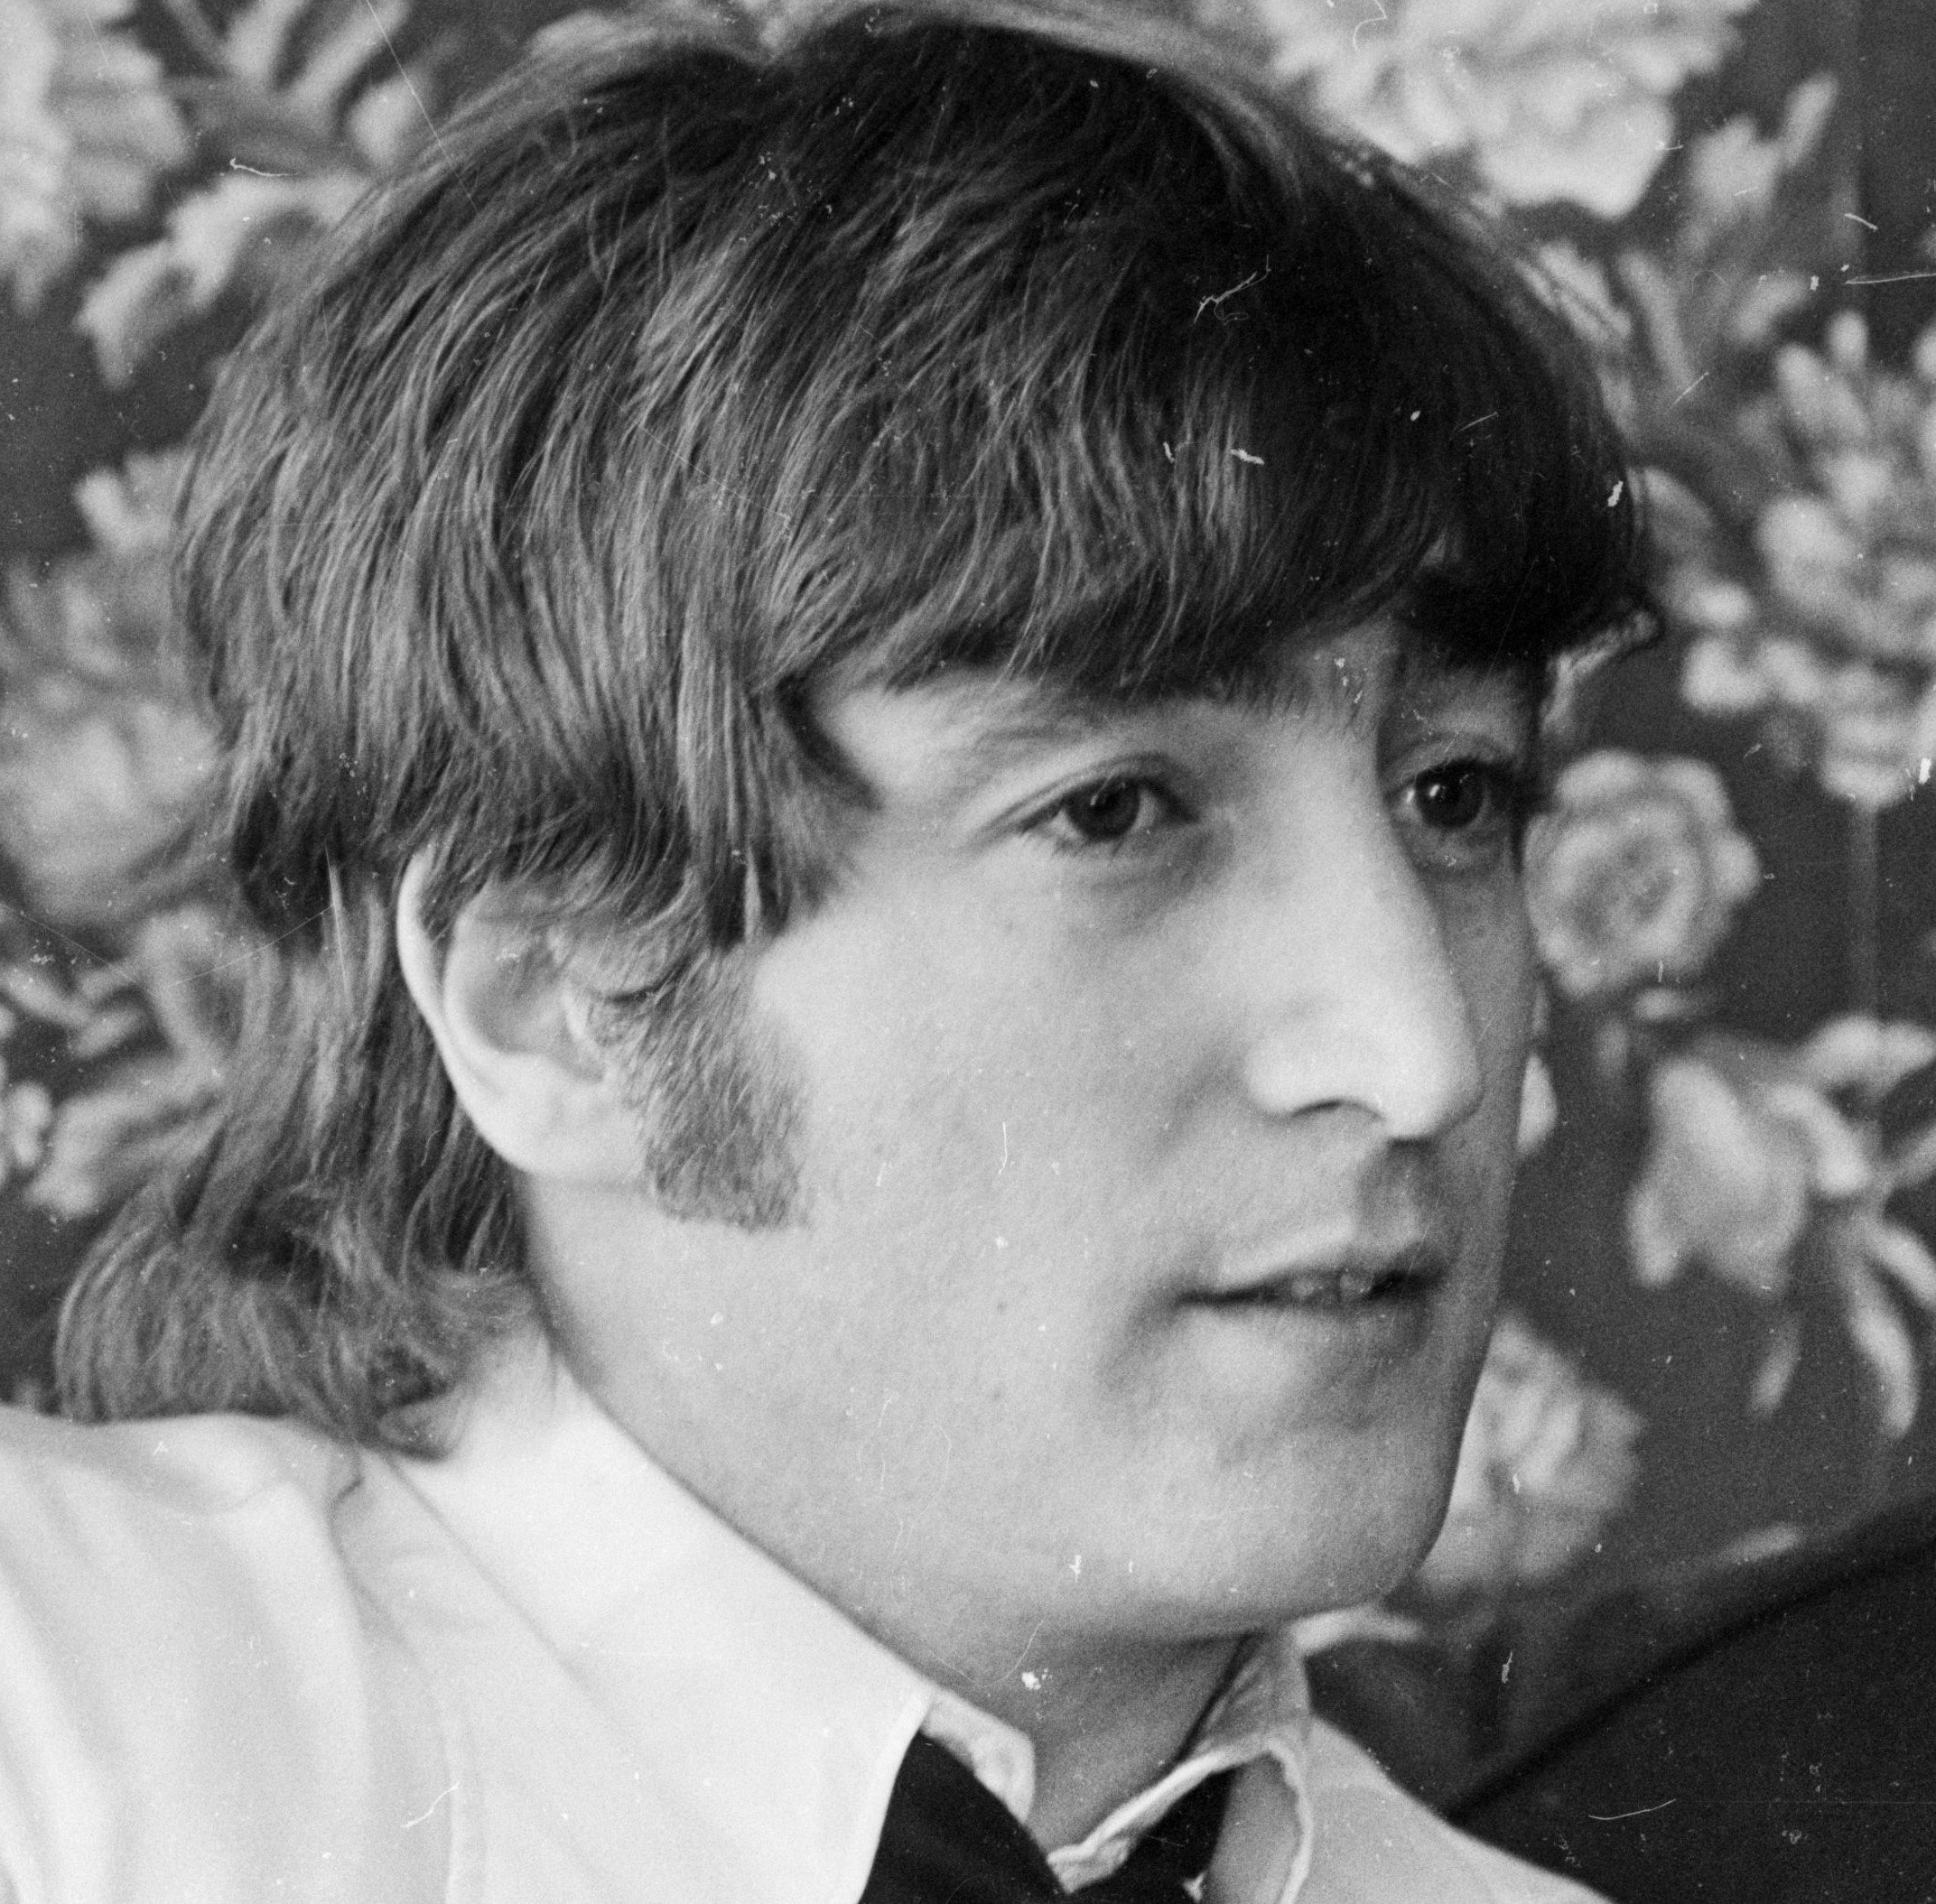 "Whatever Gets You Thru the Night" singer John Lennon in black-and-white